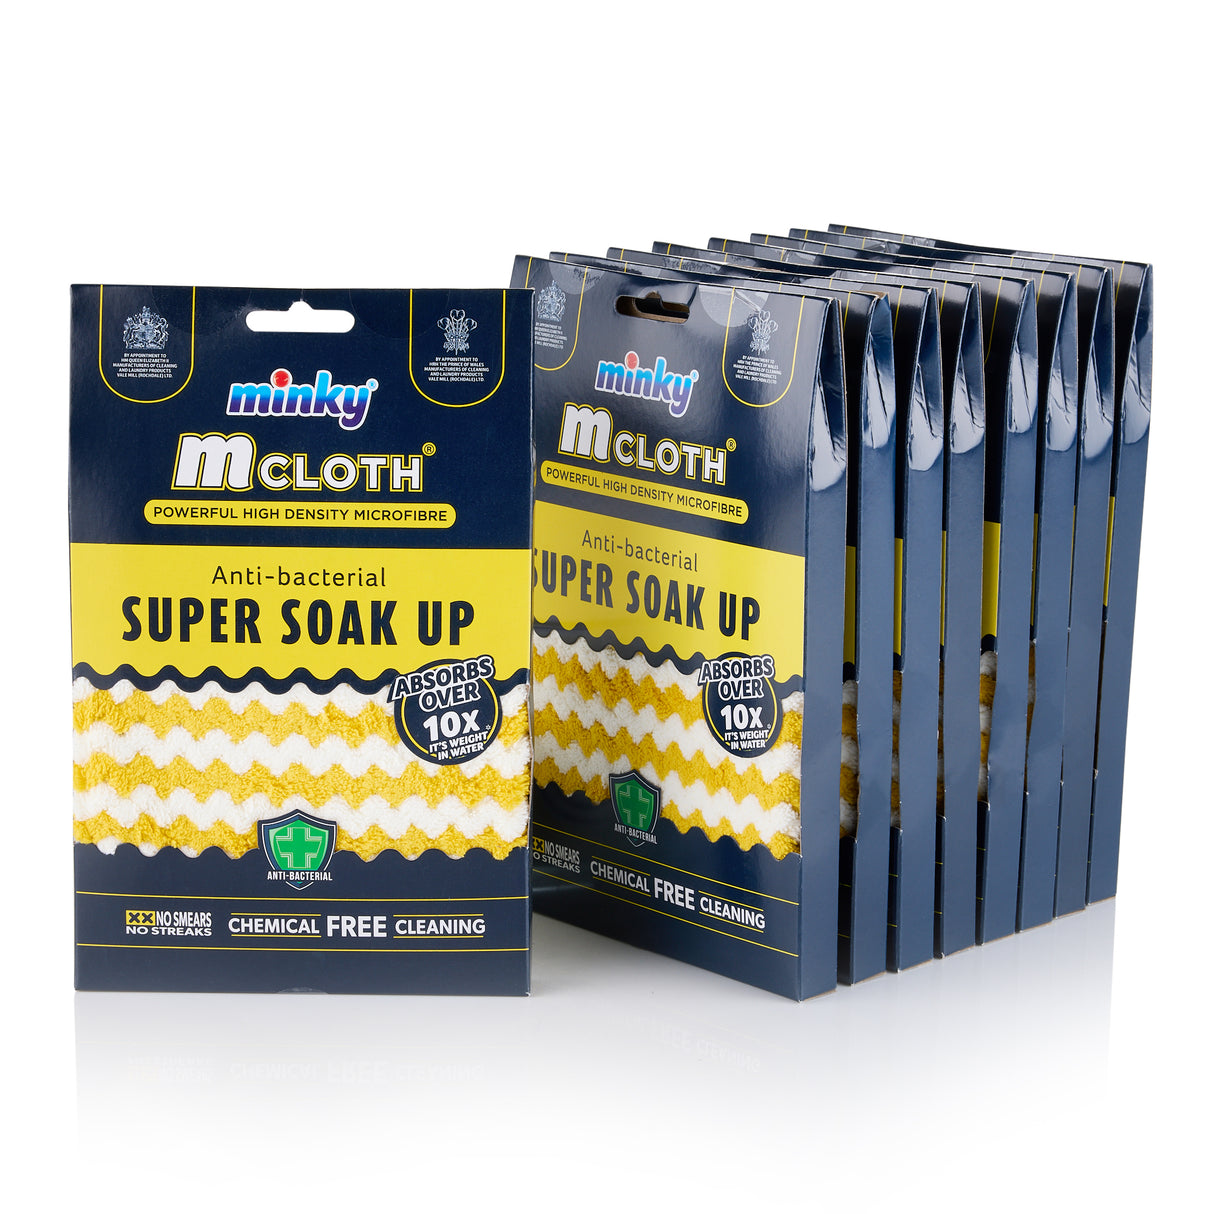 Minky M Cloth Super Soak Up - Multipack Microfibre Cloths, Pack of 9